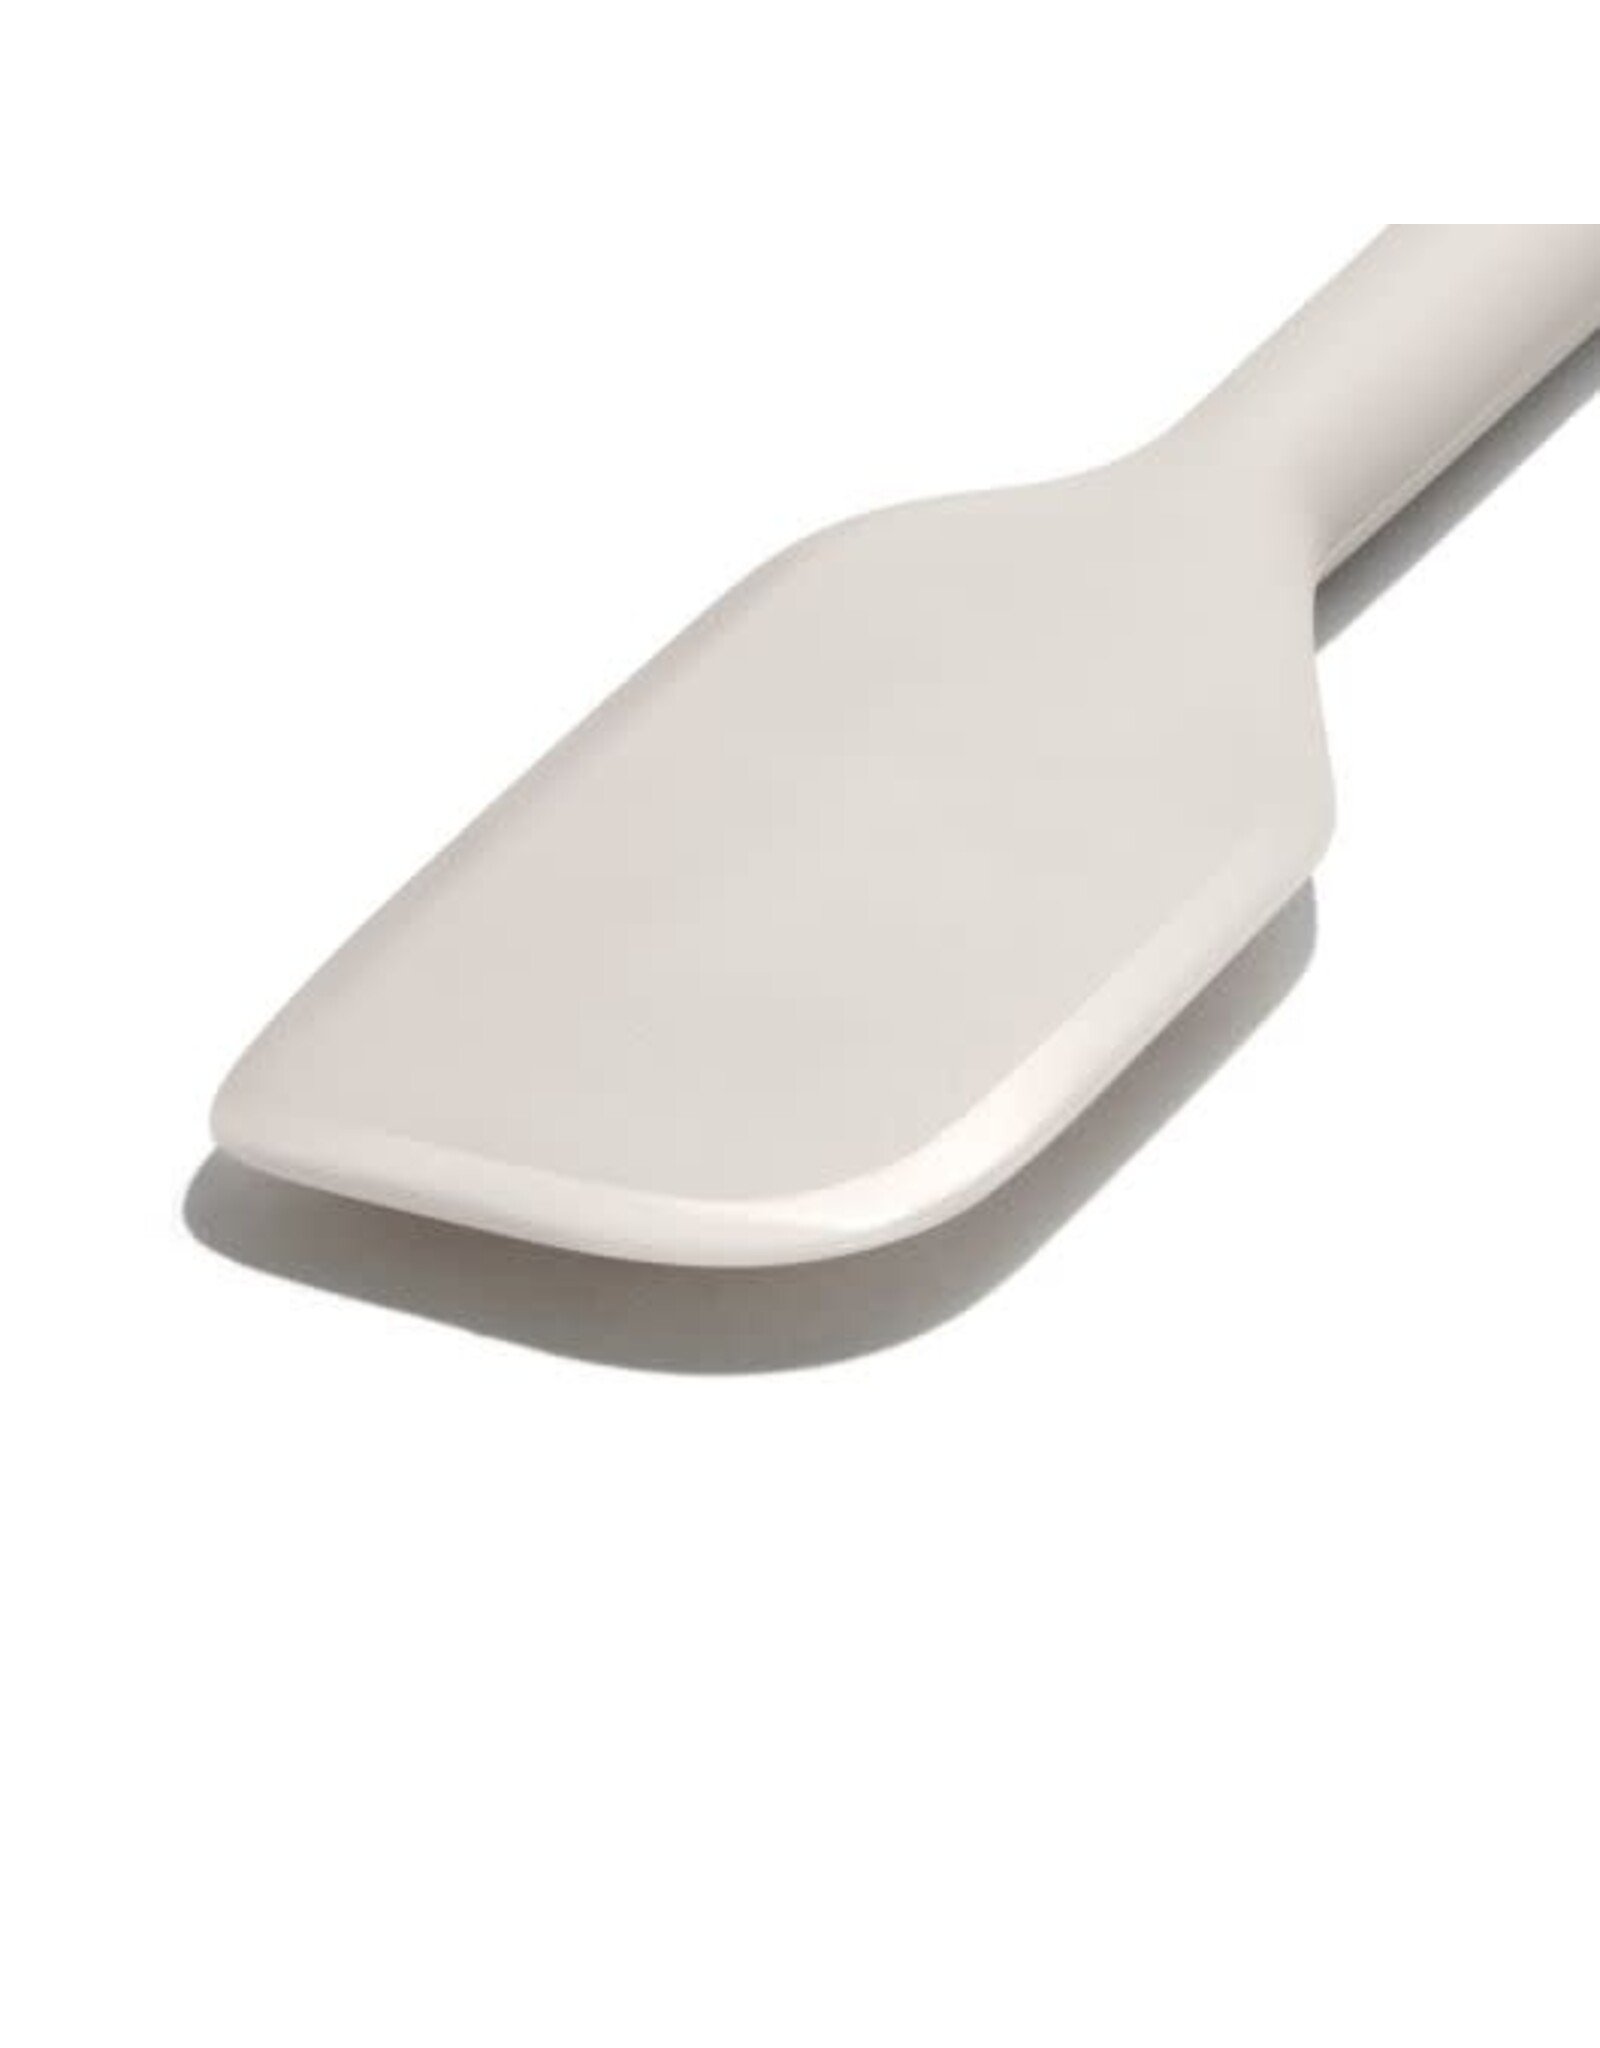 https://cdn.shoplightspeed.com/shops/635781/files/57116857/1600x2048x2/oxo-oxo-small-silicone-spatula-oat.jpg